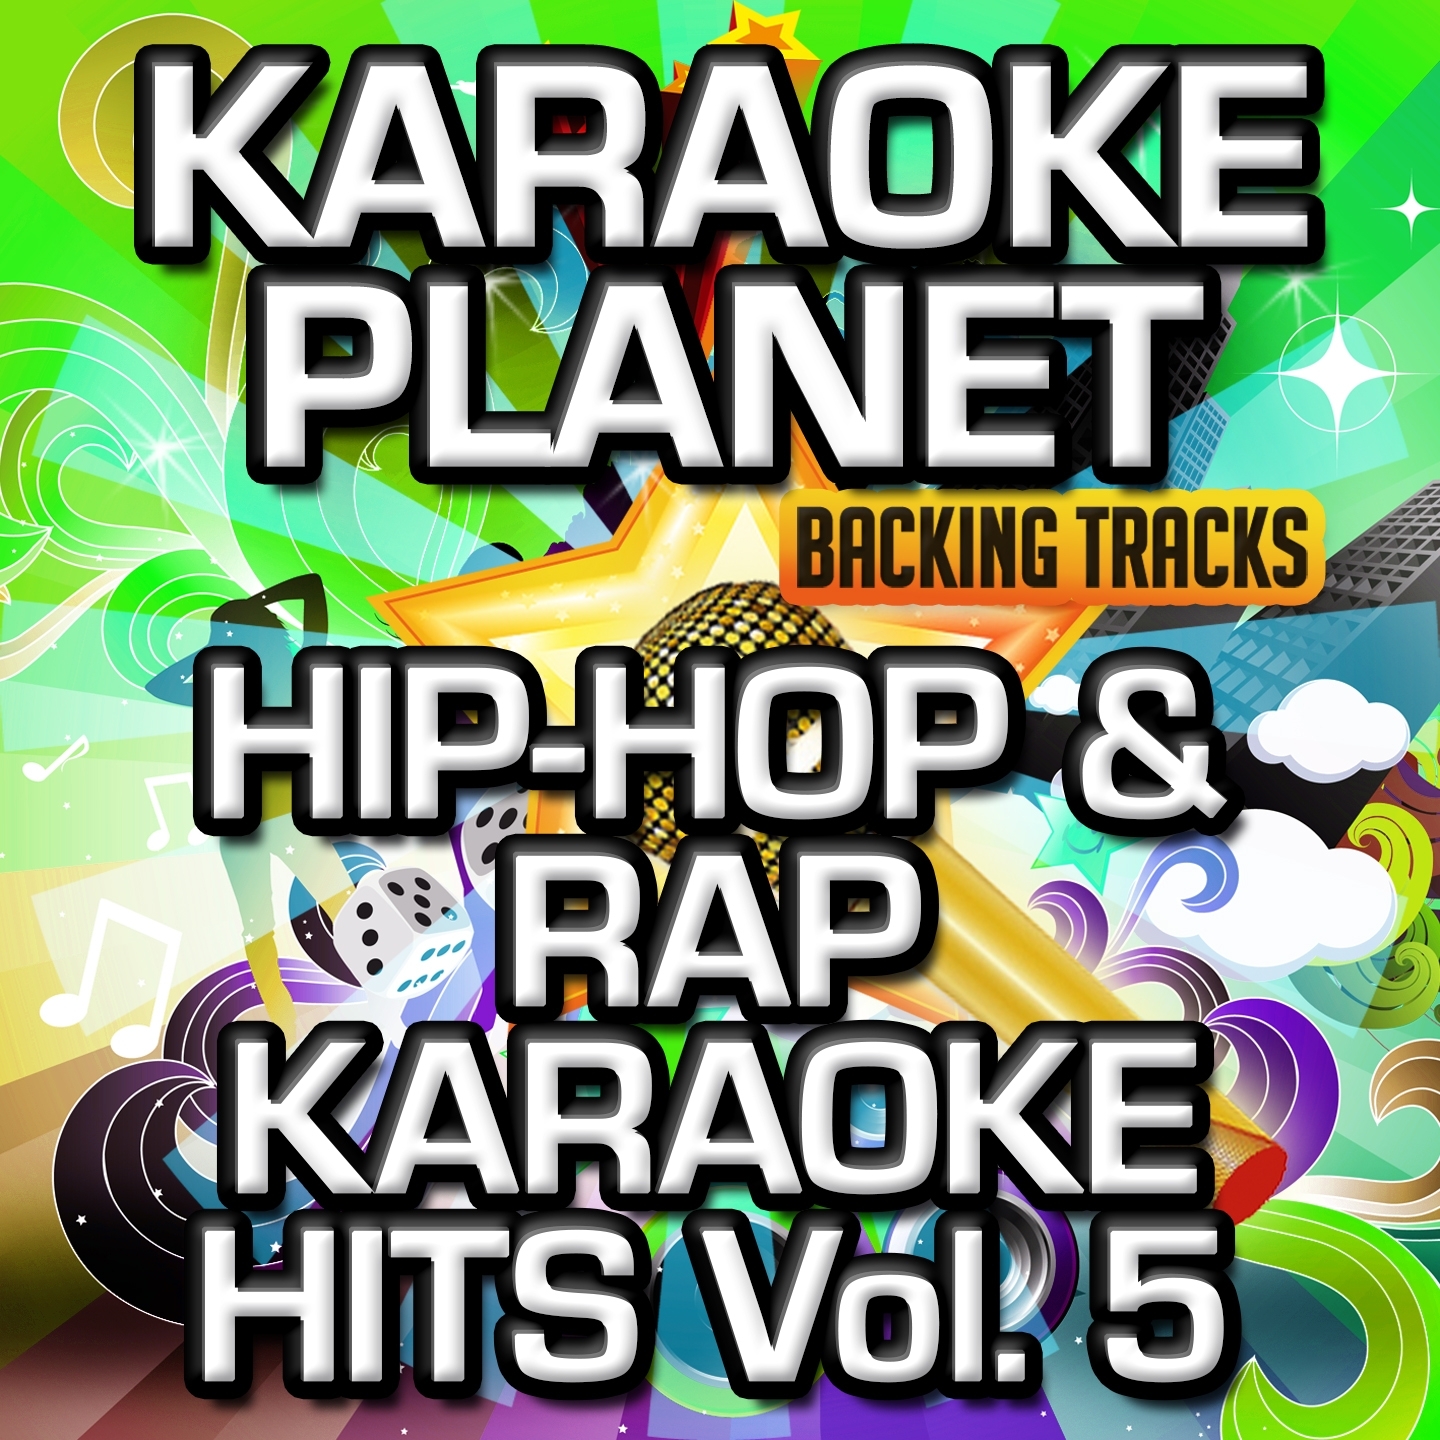 Hip-Hop & Rap Karaoke Hits, Vol. 5